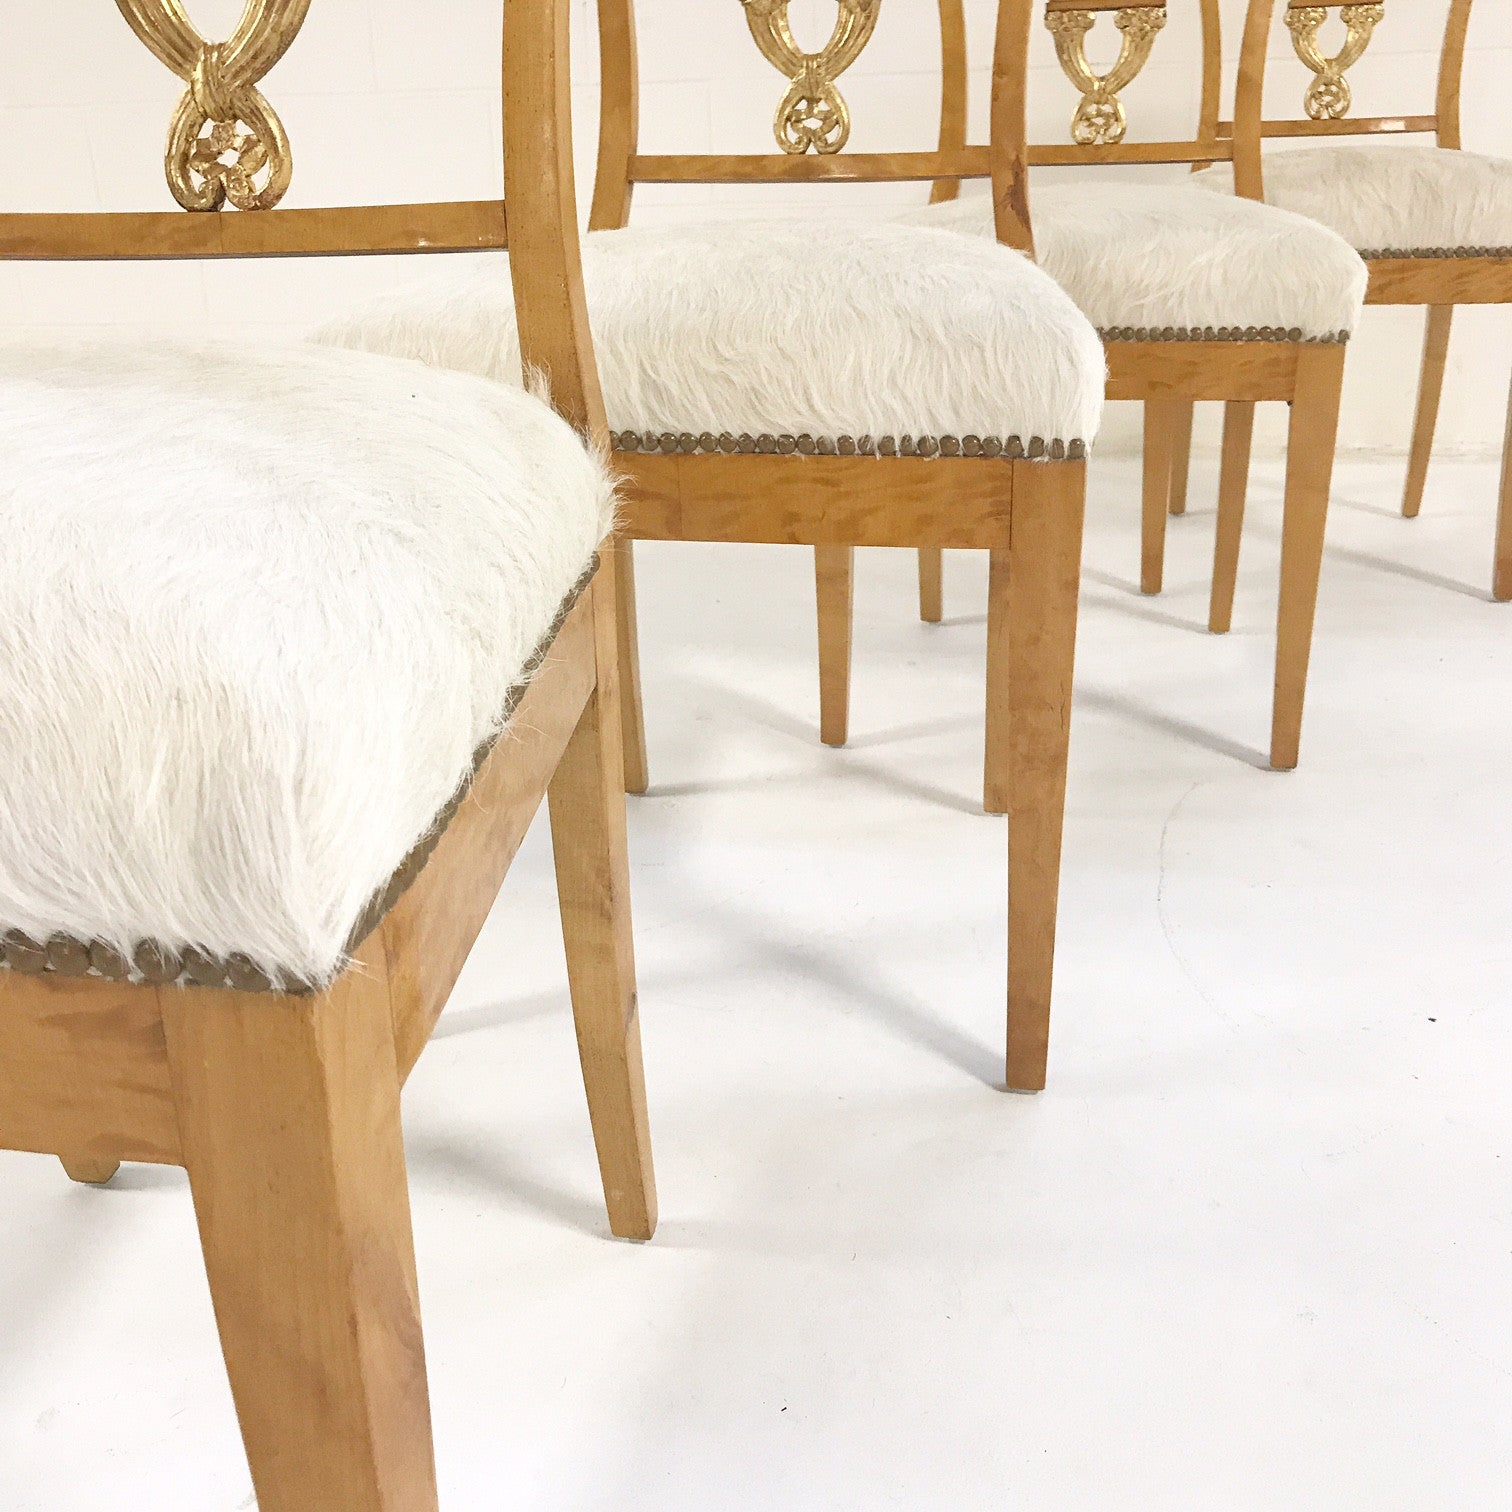 Biedermeier Chairs in Brazilian Cowhide, set of 4 - FORSYTH